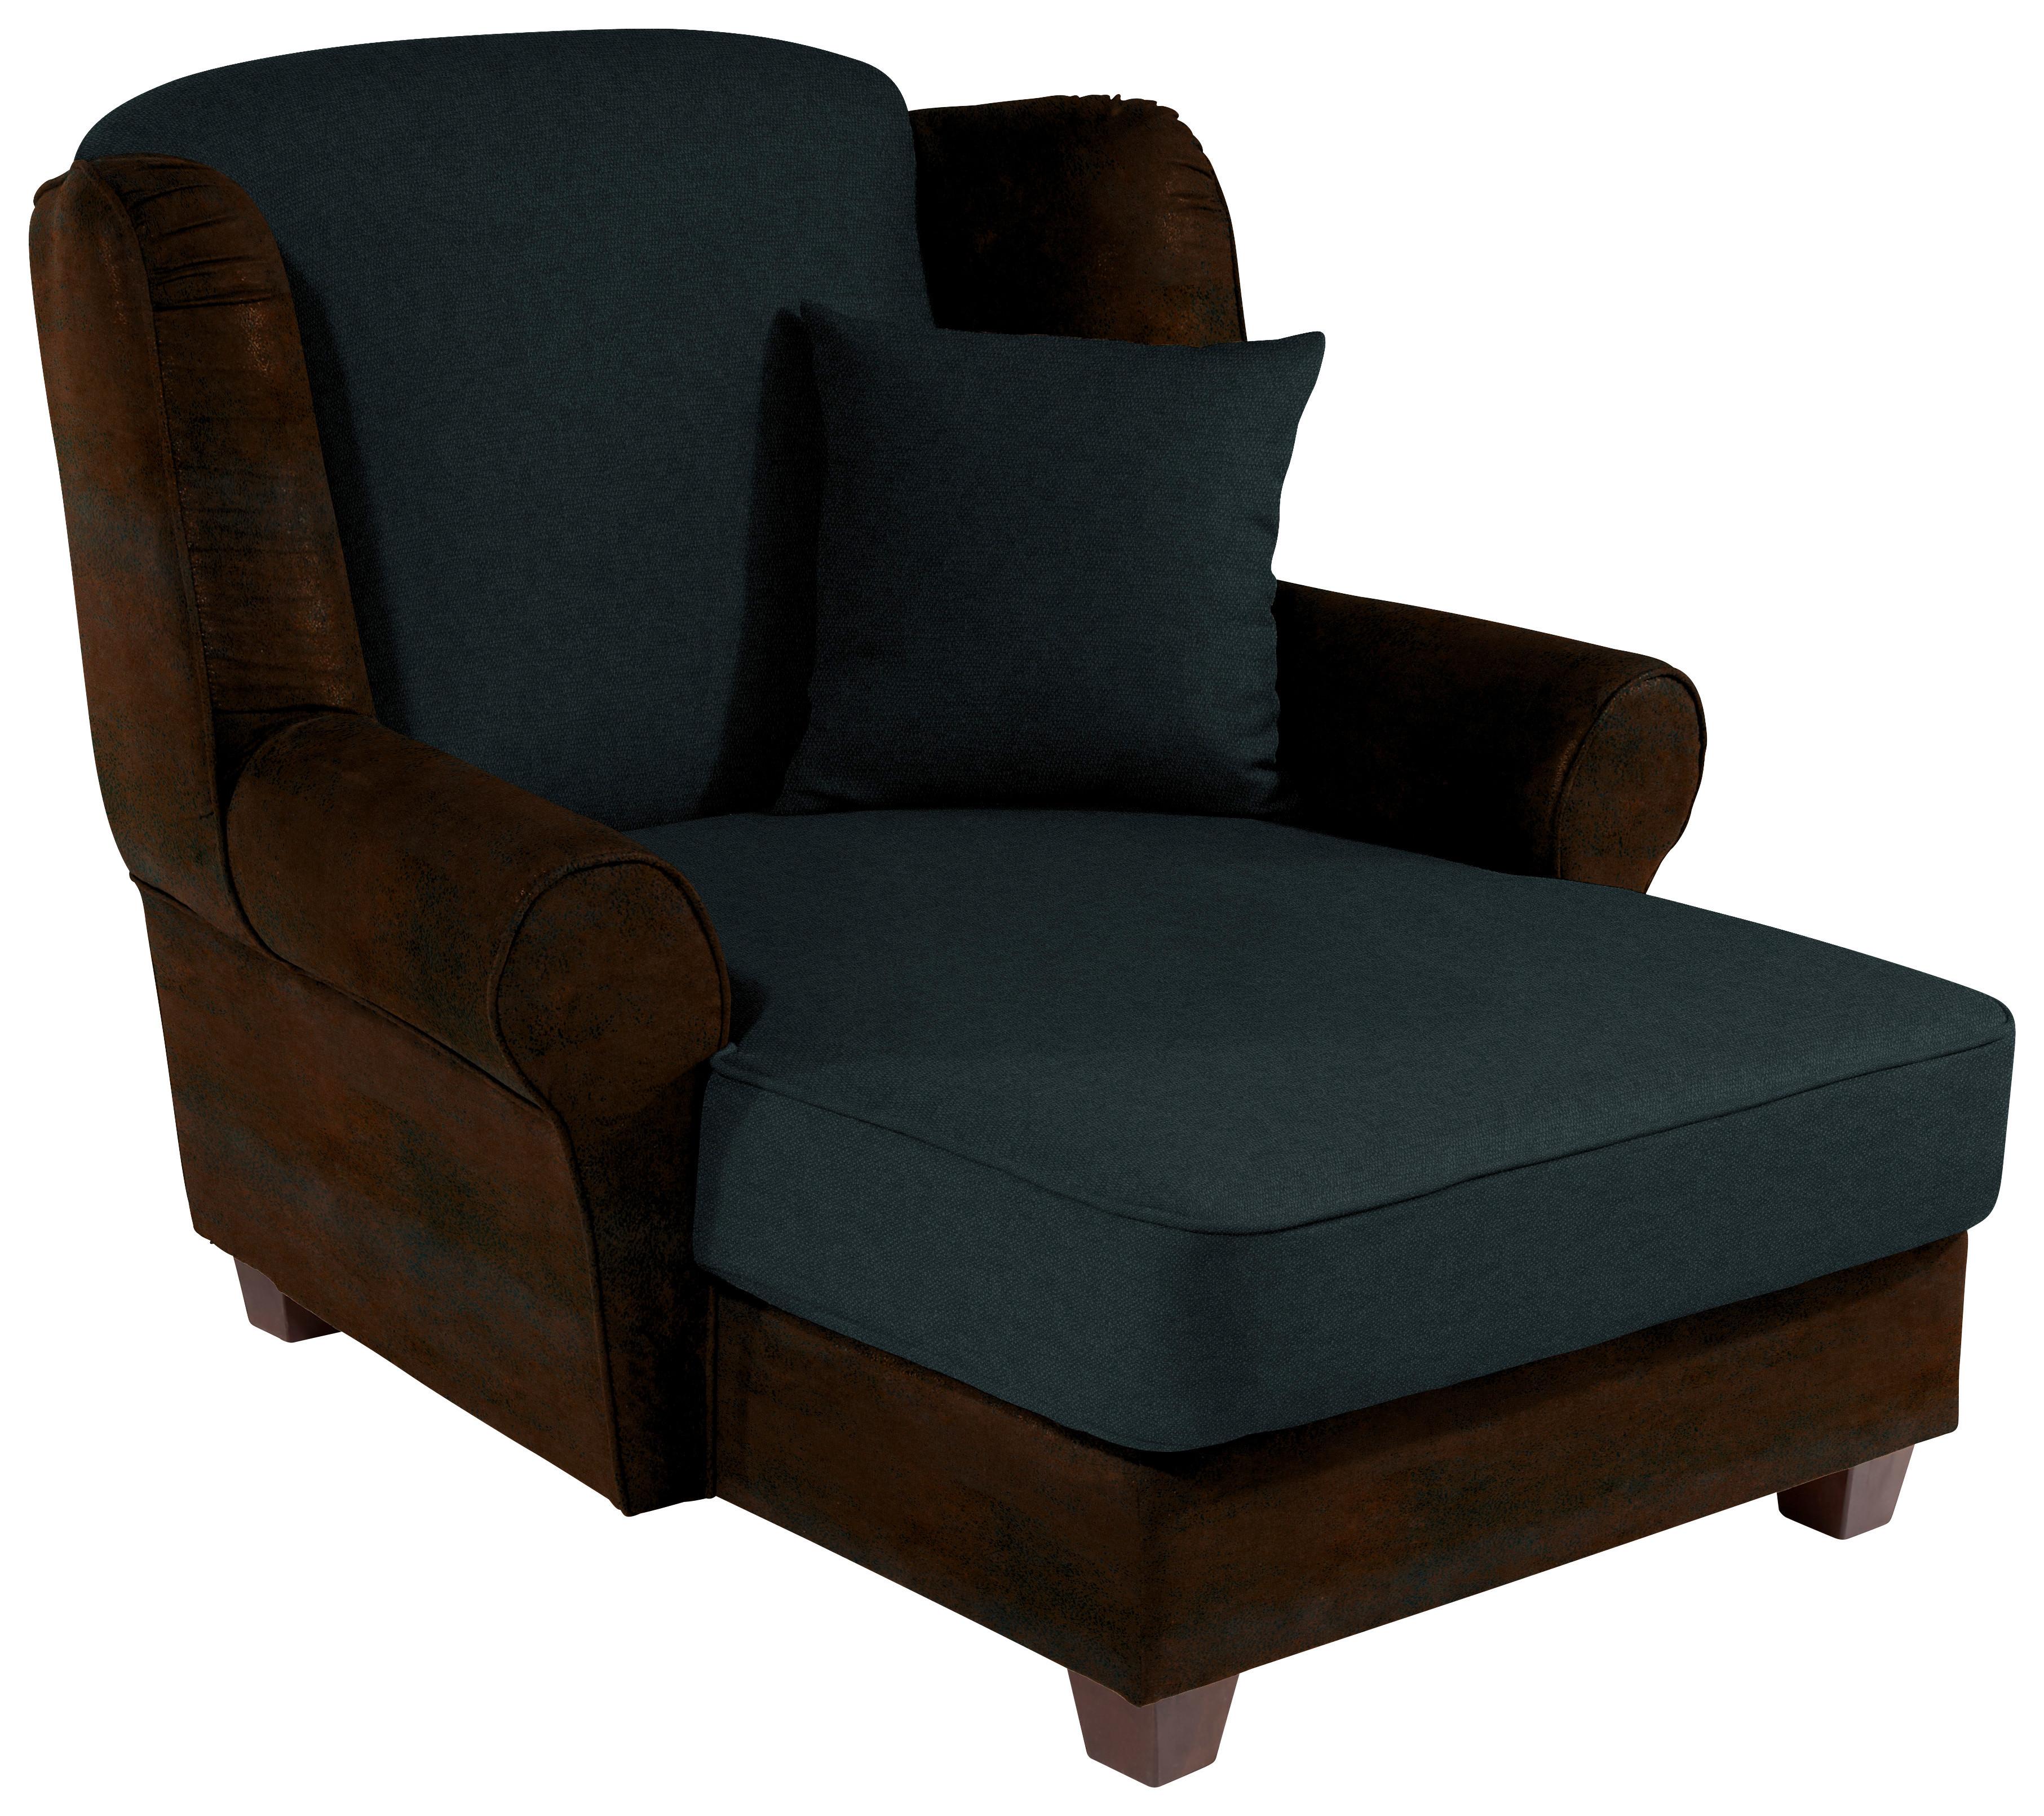 Fotelja Living - tamno smeđa/crna, Romantik / Landhaus, drvo/tekstil (120/98cm) - Modern Living